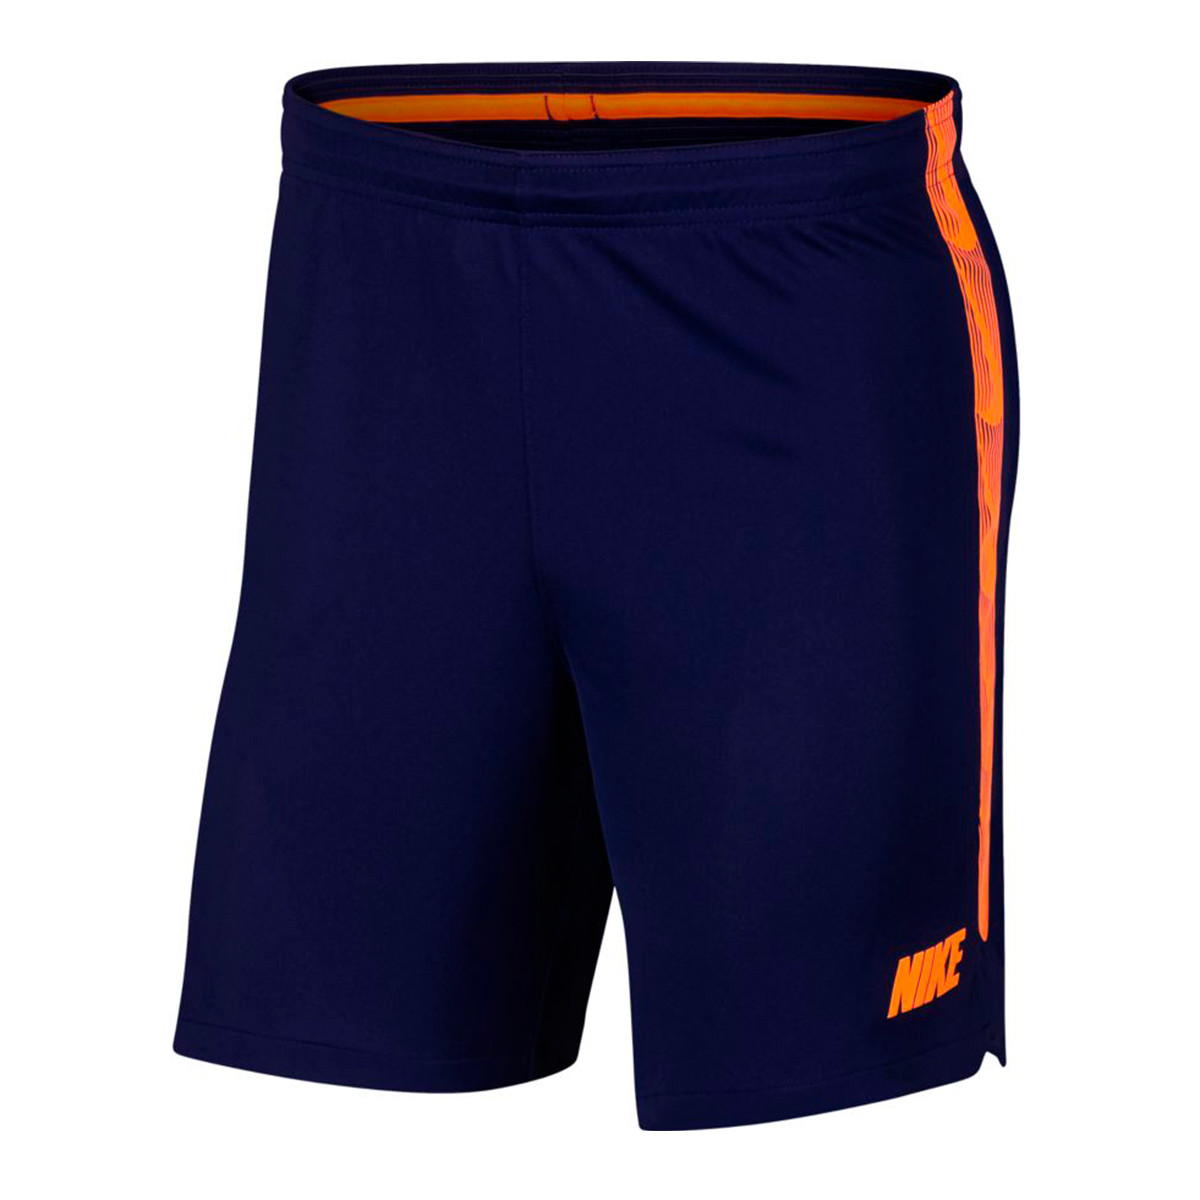 orange nike dri fit shorts